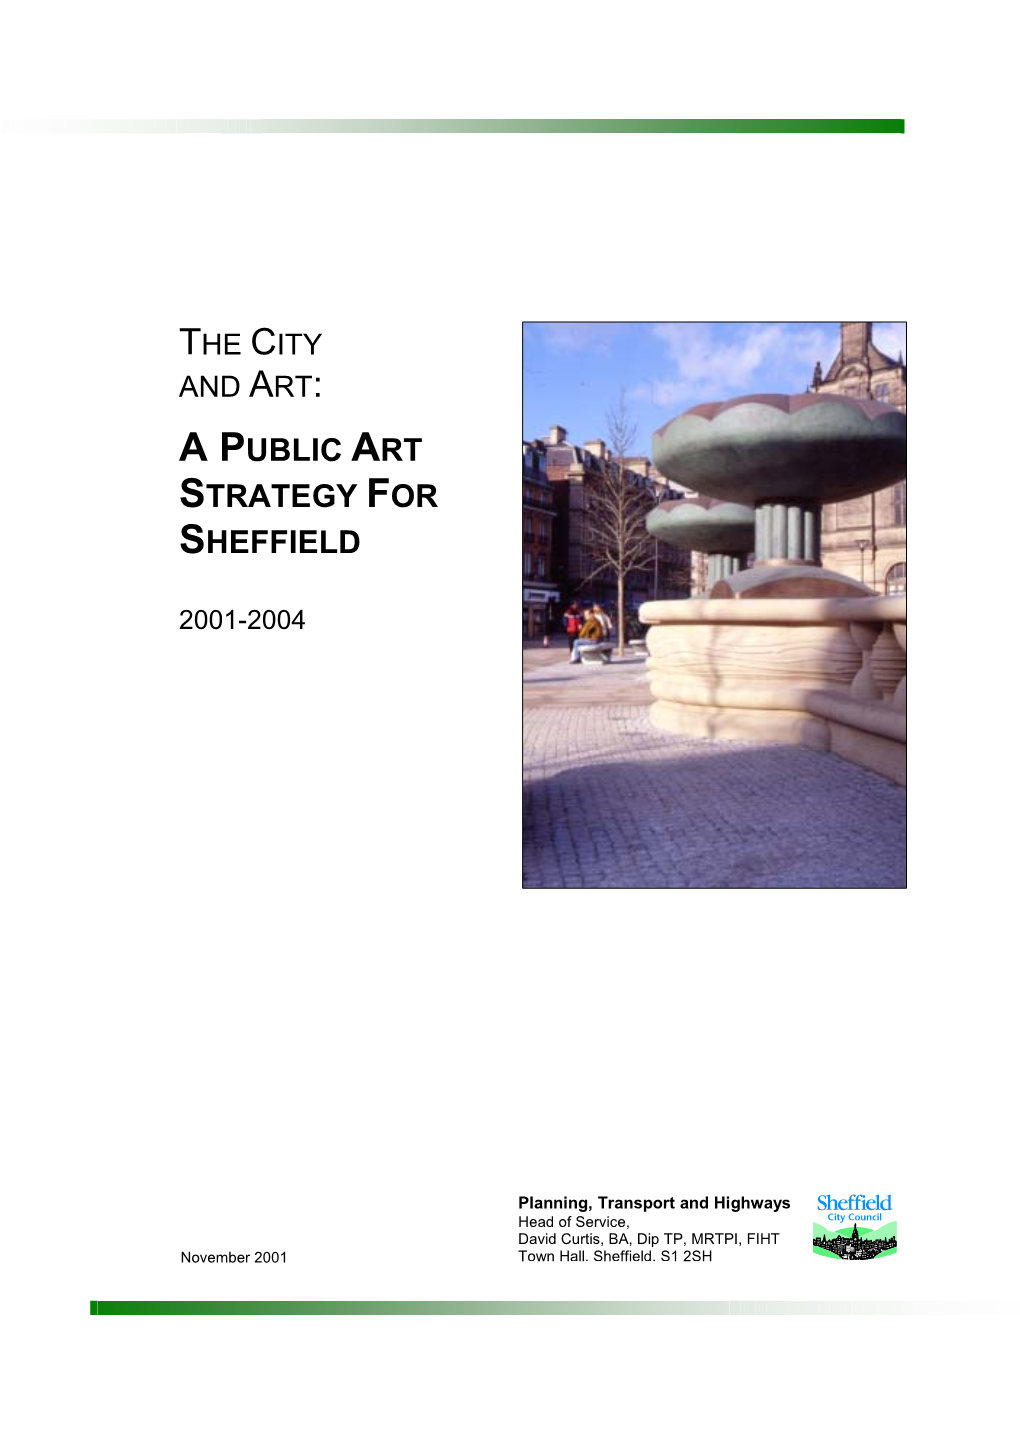 A Public Art Strategy for Sheffield